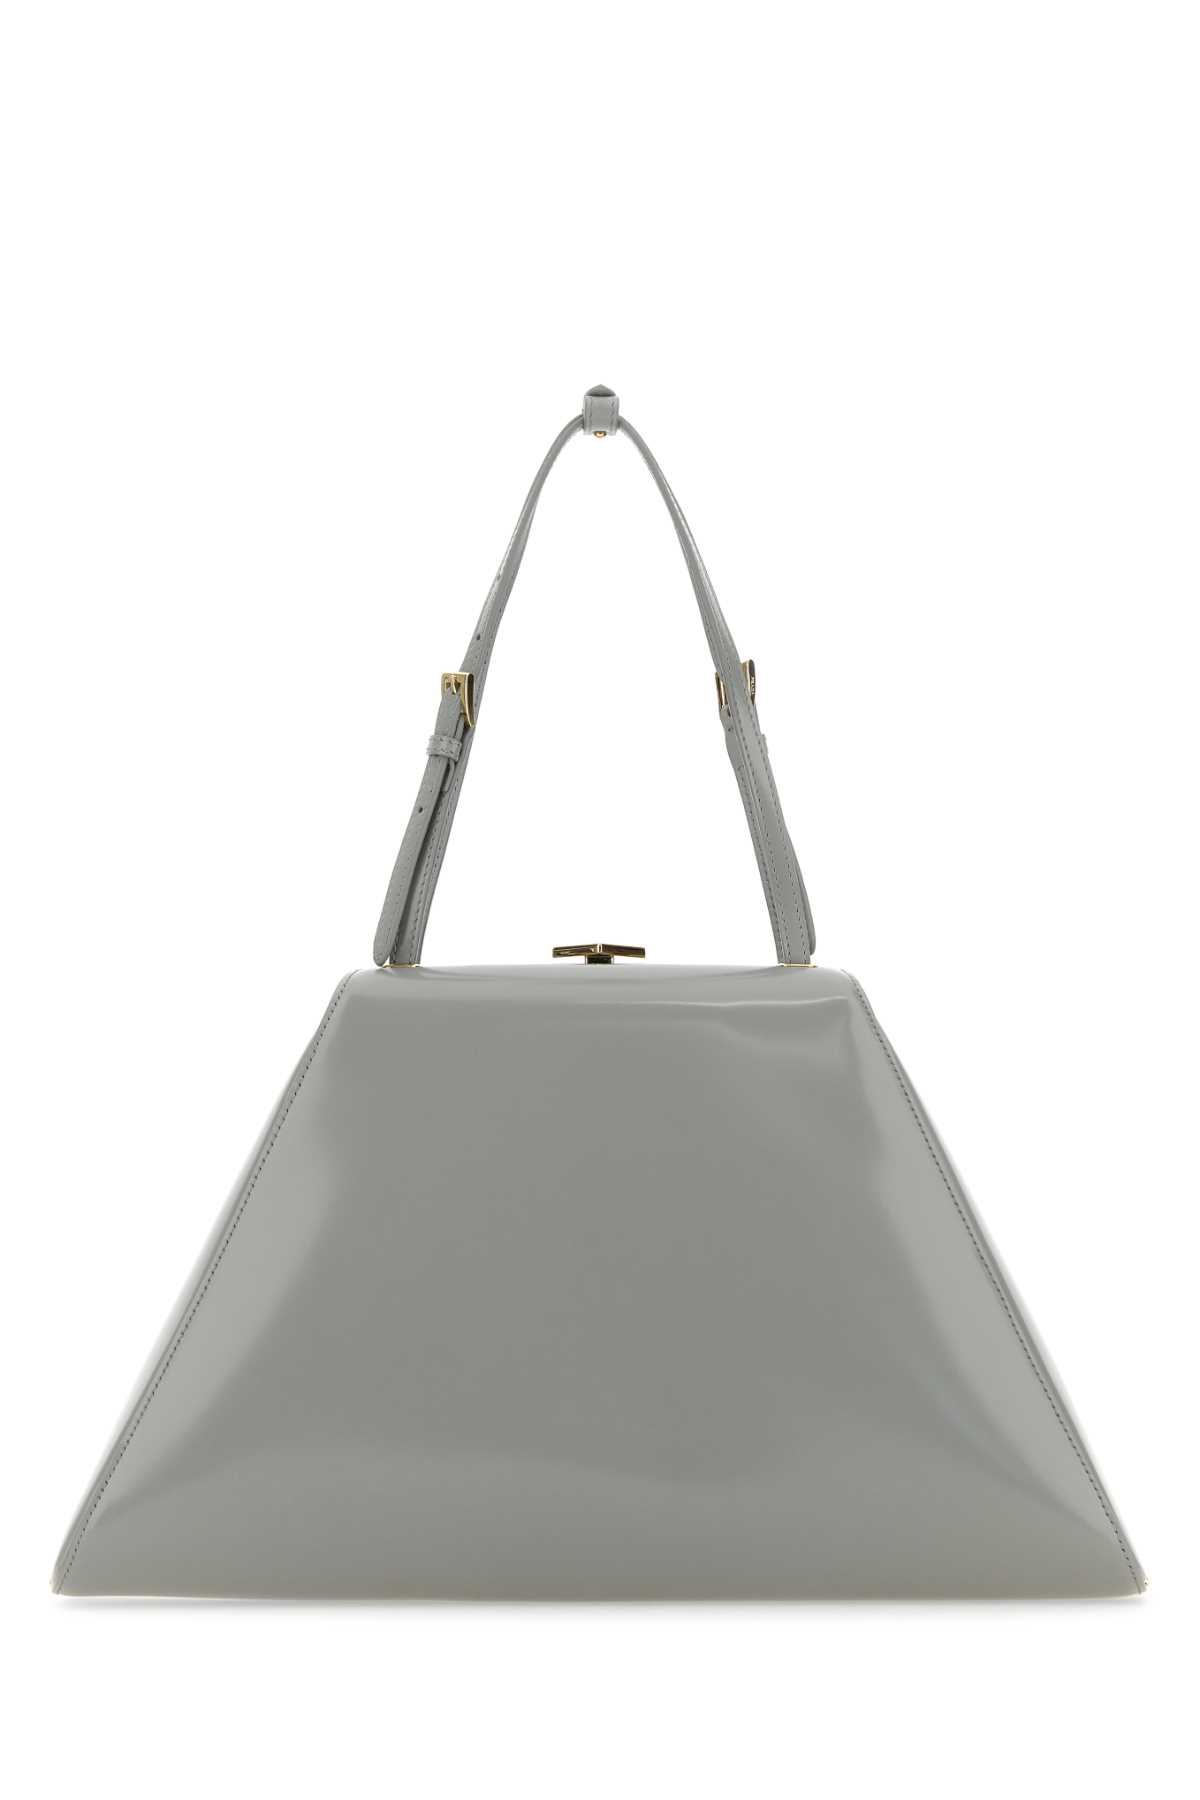 Prada Light Grey Leather Handbag